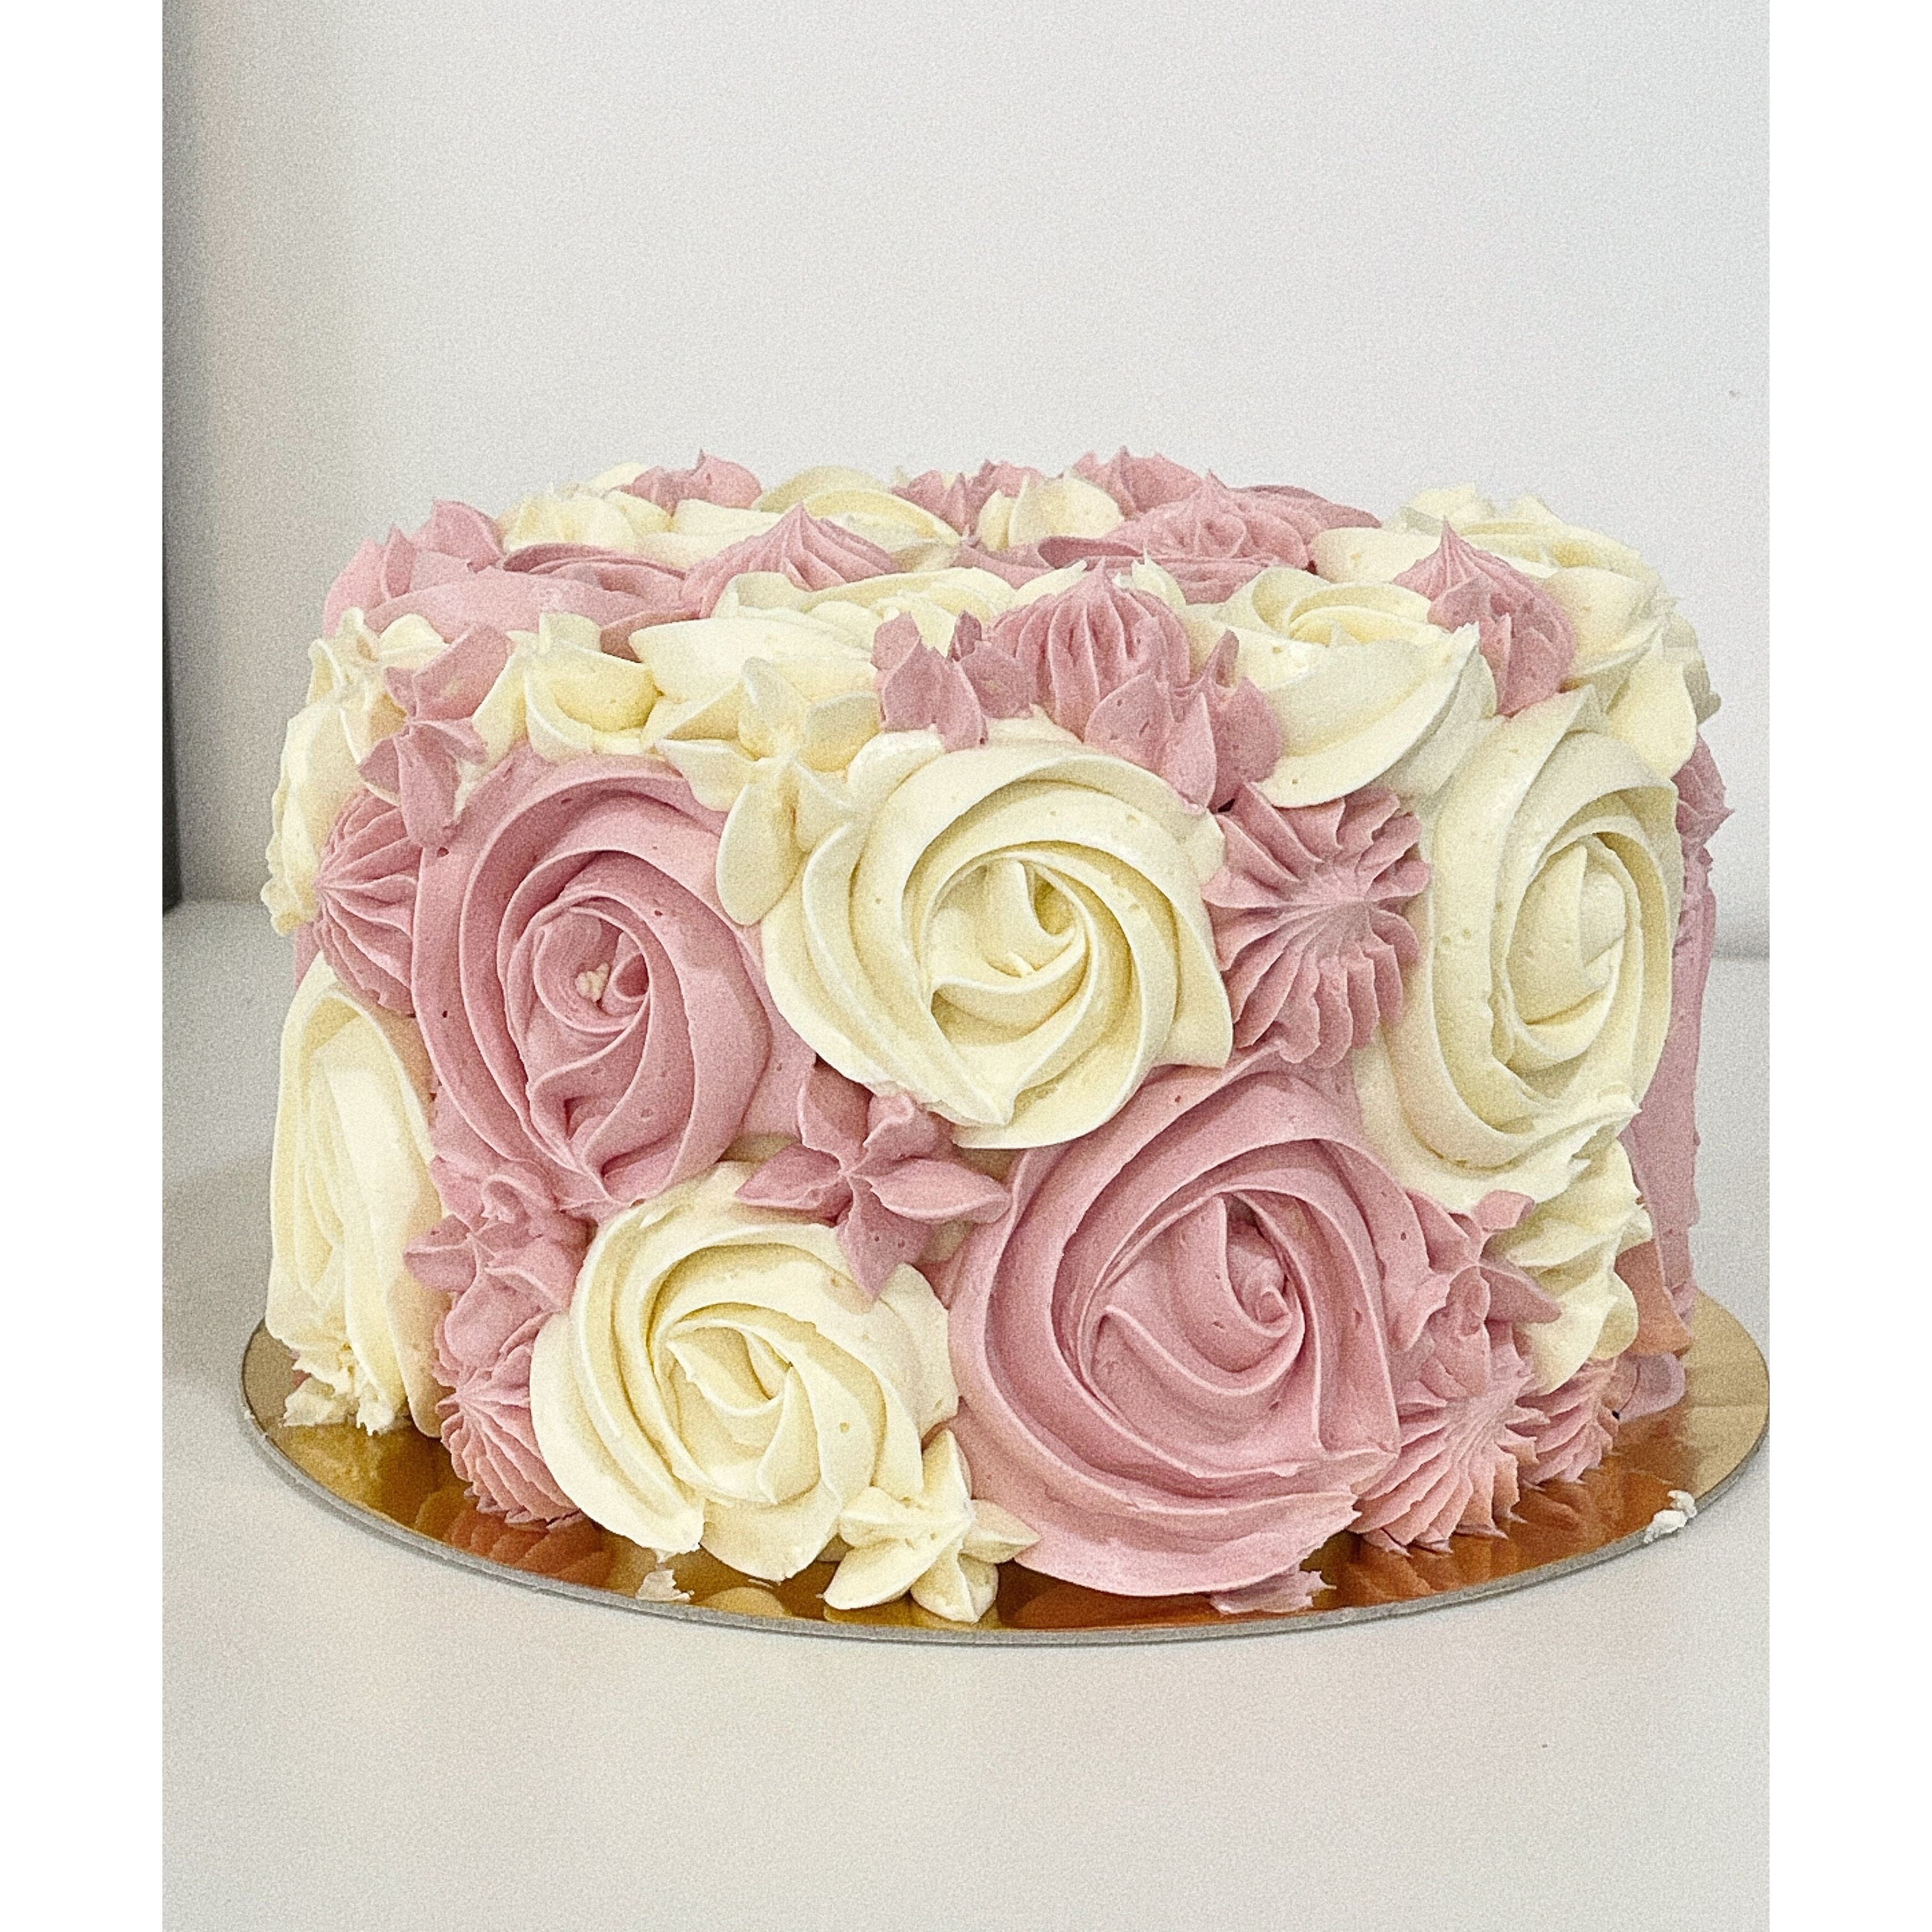 ROSETTE CAKE ROSE & BLANC atelierdesgateaux.com 